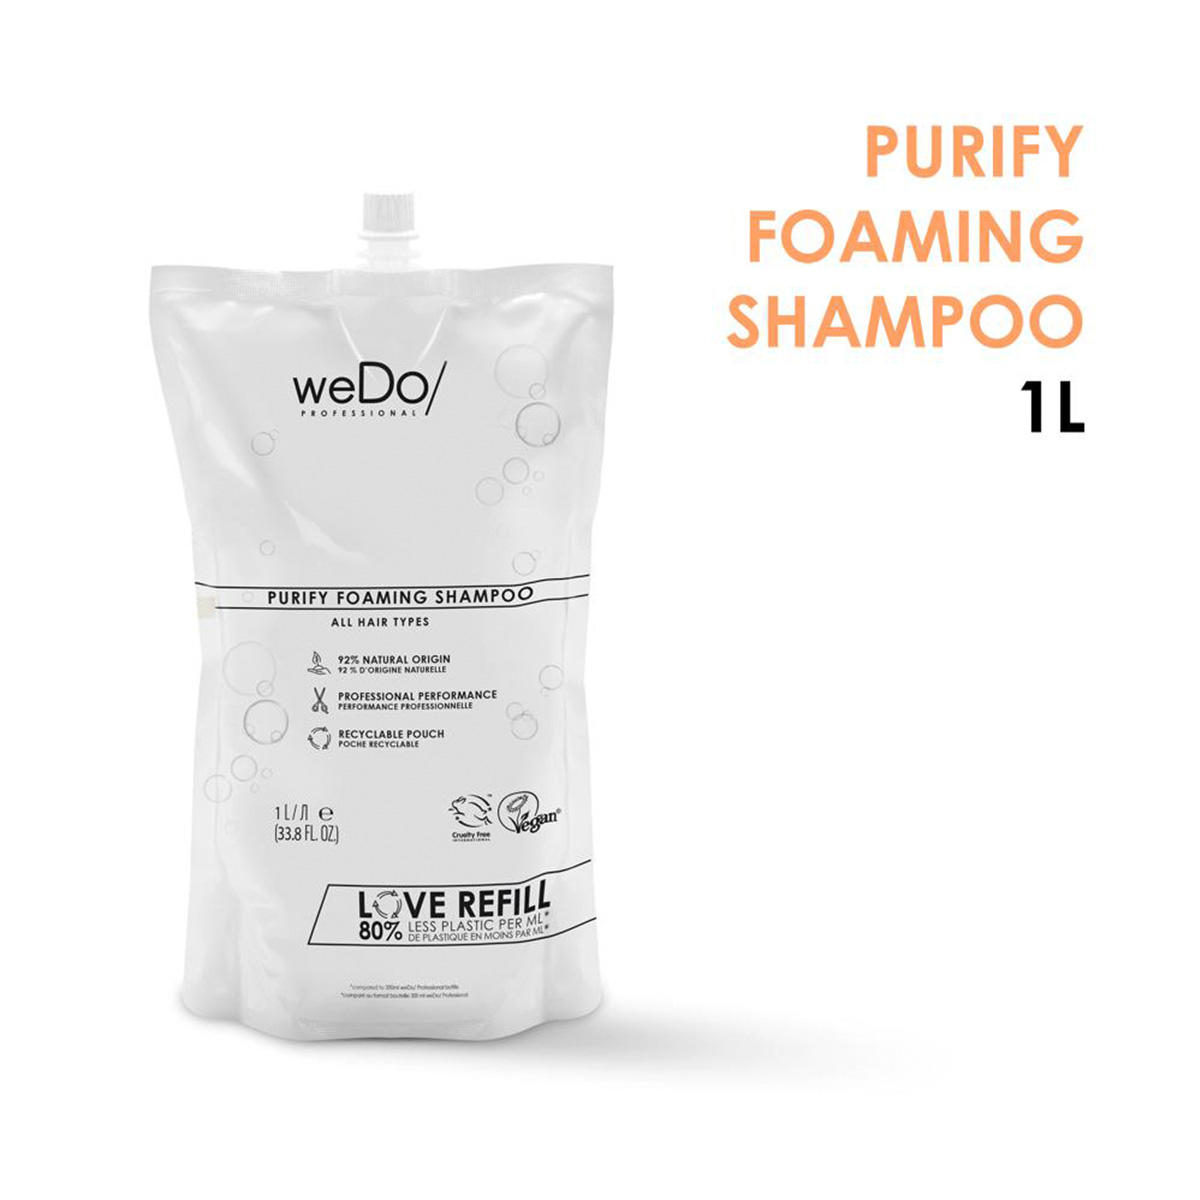 weDo/ Purify Foaming Shampoo Refill 1 Liter - 2